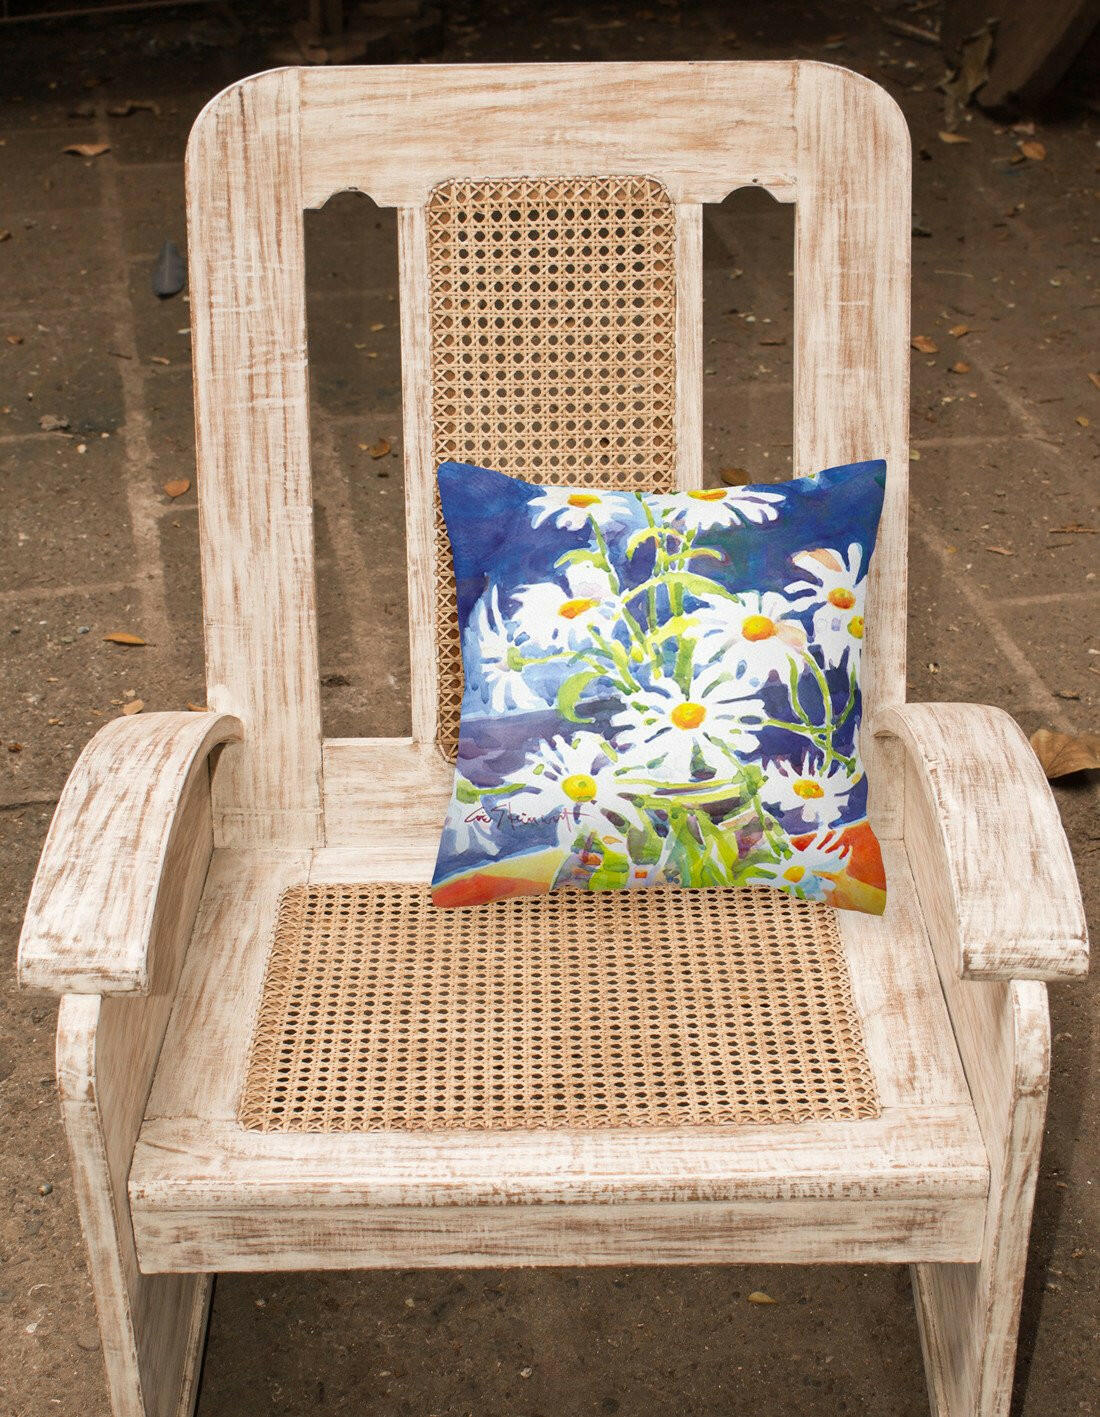 Flowers - Daisy   Canvas Fabric Decorative Pillow - the-store.com